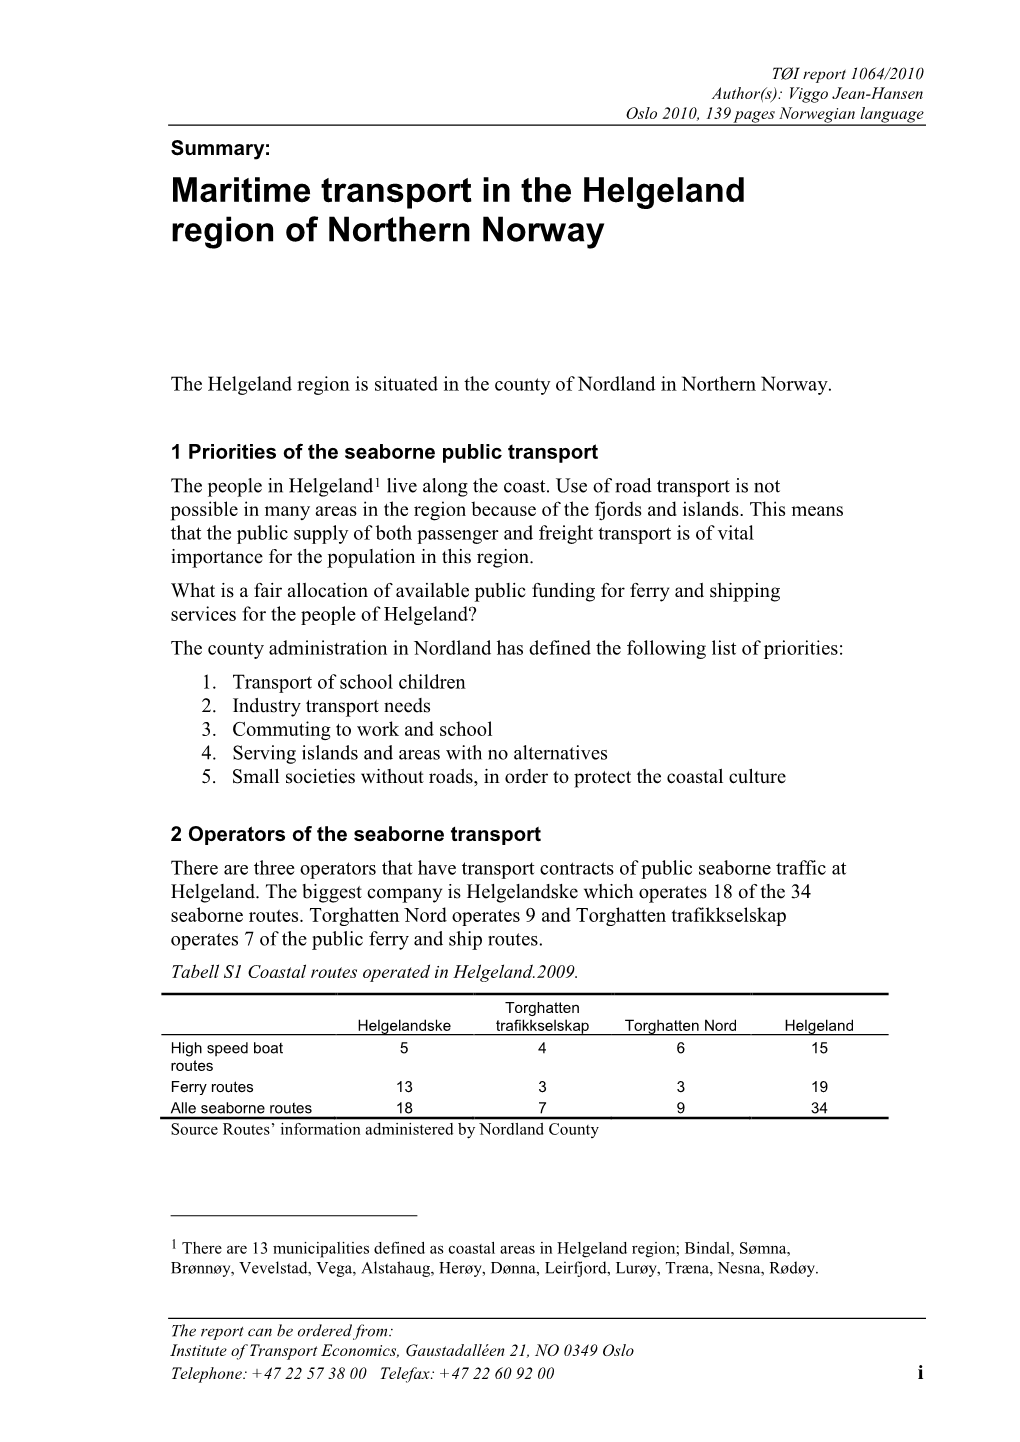 Maritime Transport in the Helgeland Region of Northern Norway